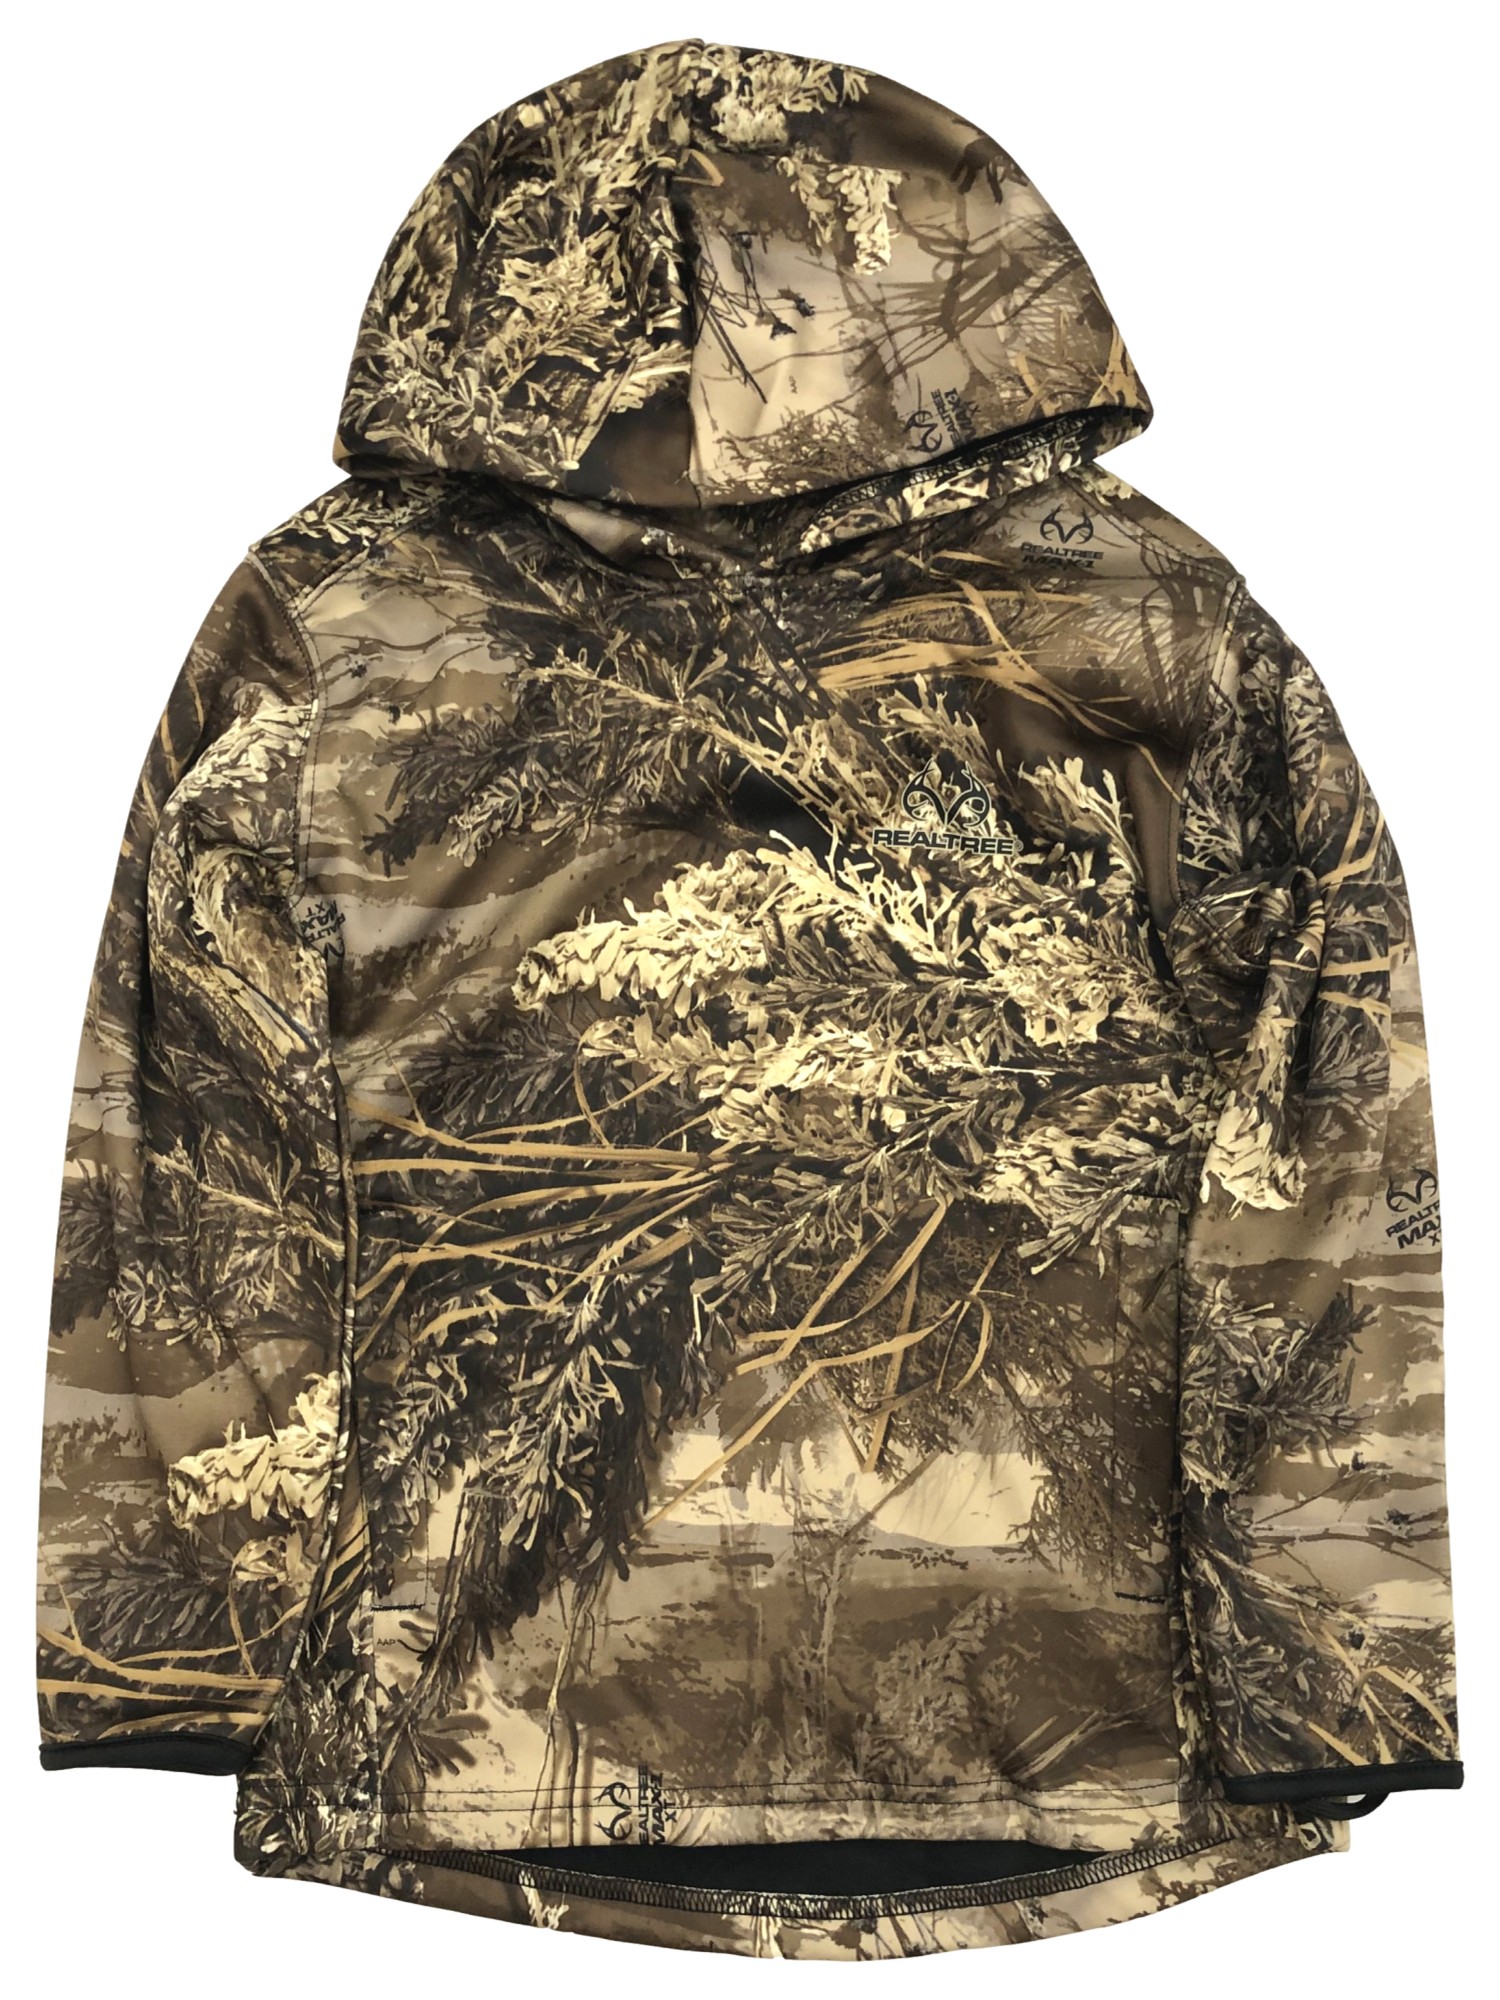 Realtree Boys Brown Camo Face Gaiter Hoodie Sweatshirt Jacket Camouflage